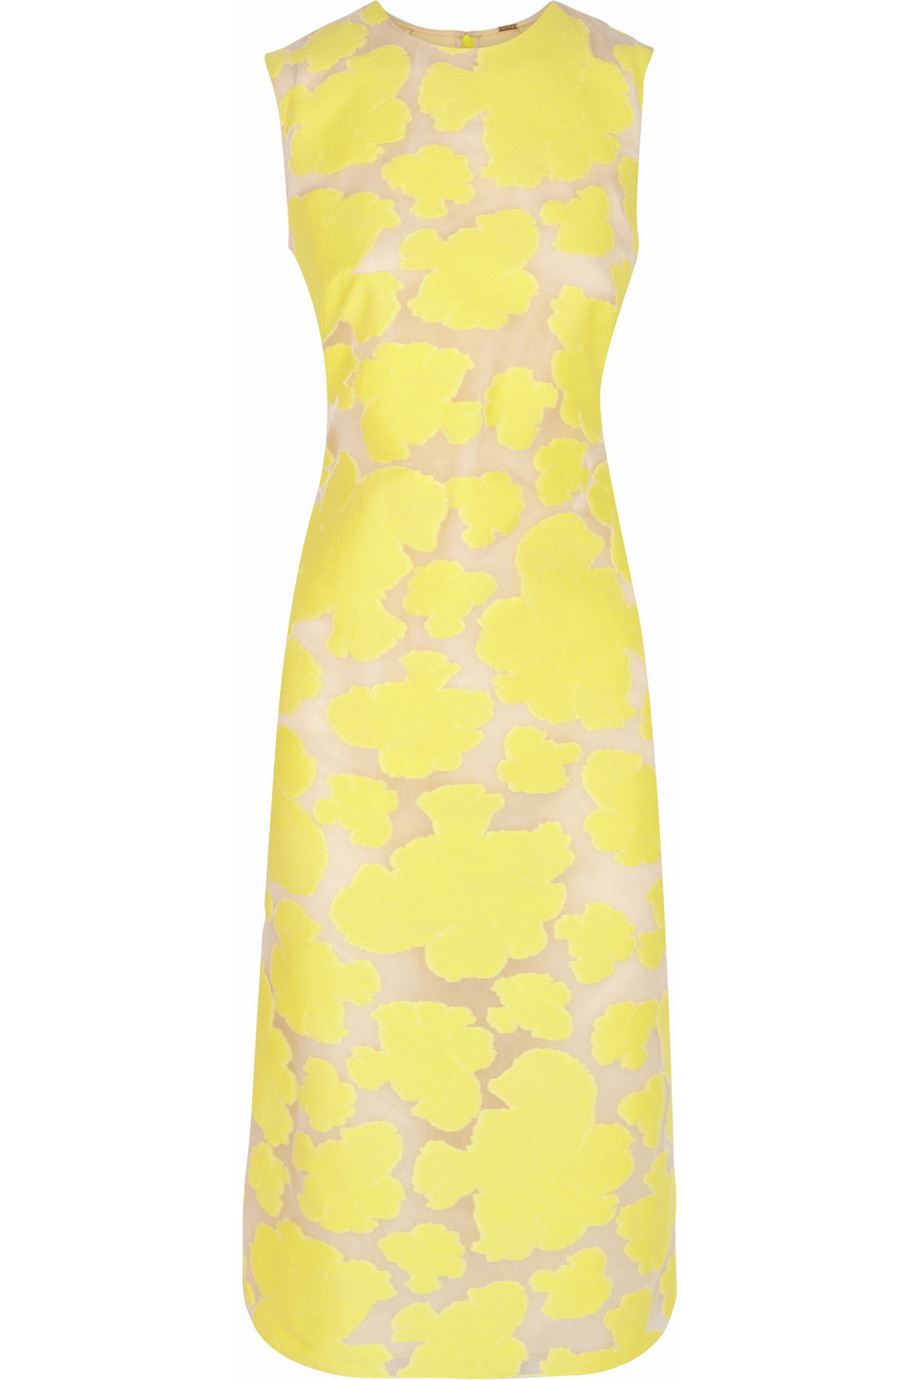 Lyst - Adam Lippes Devoré Cotton and Silkblend Jacquard Dress in Yellow